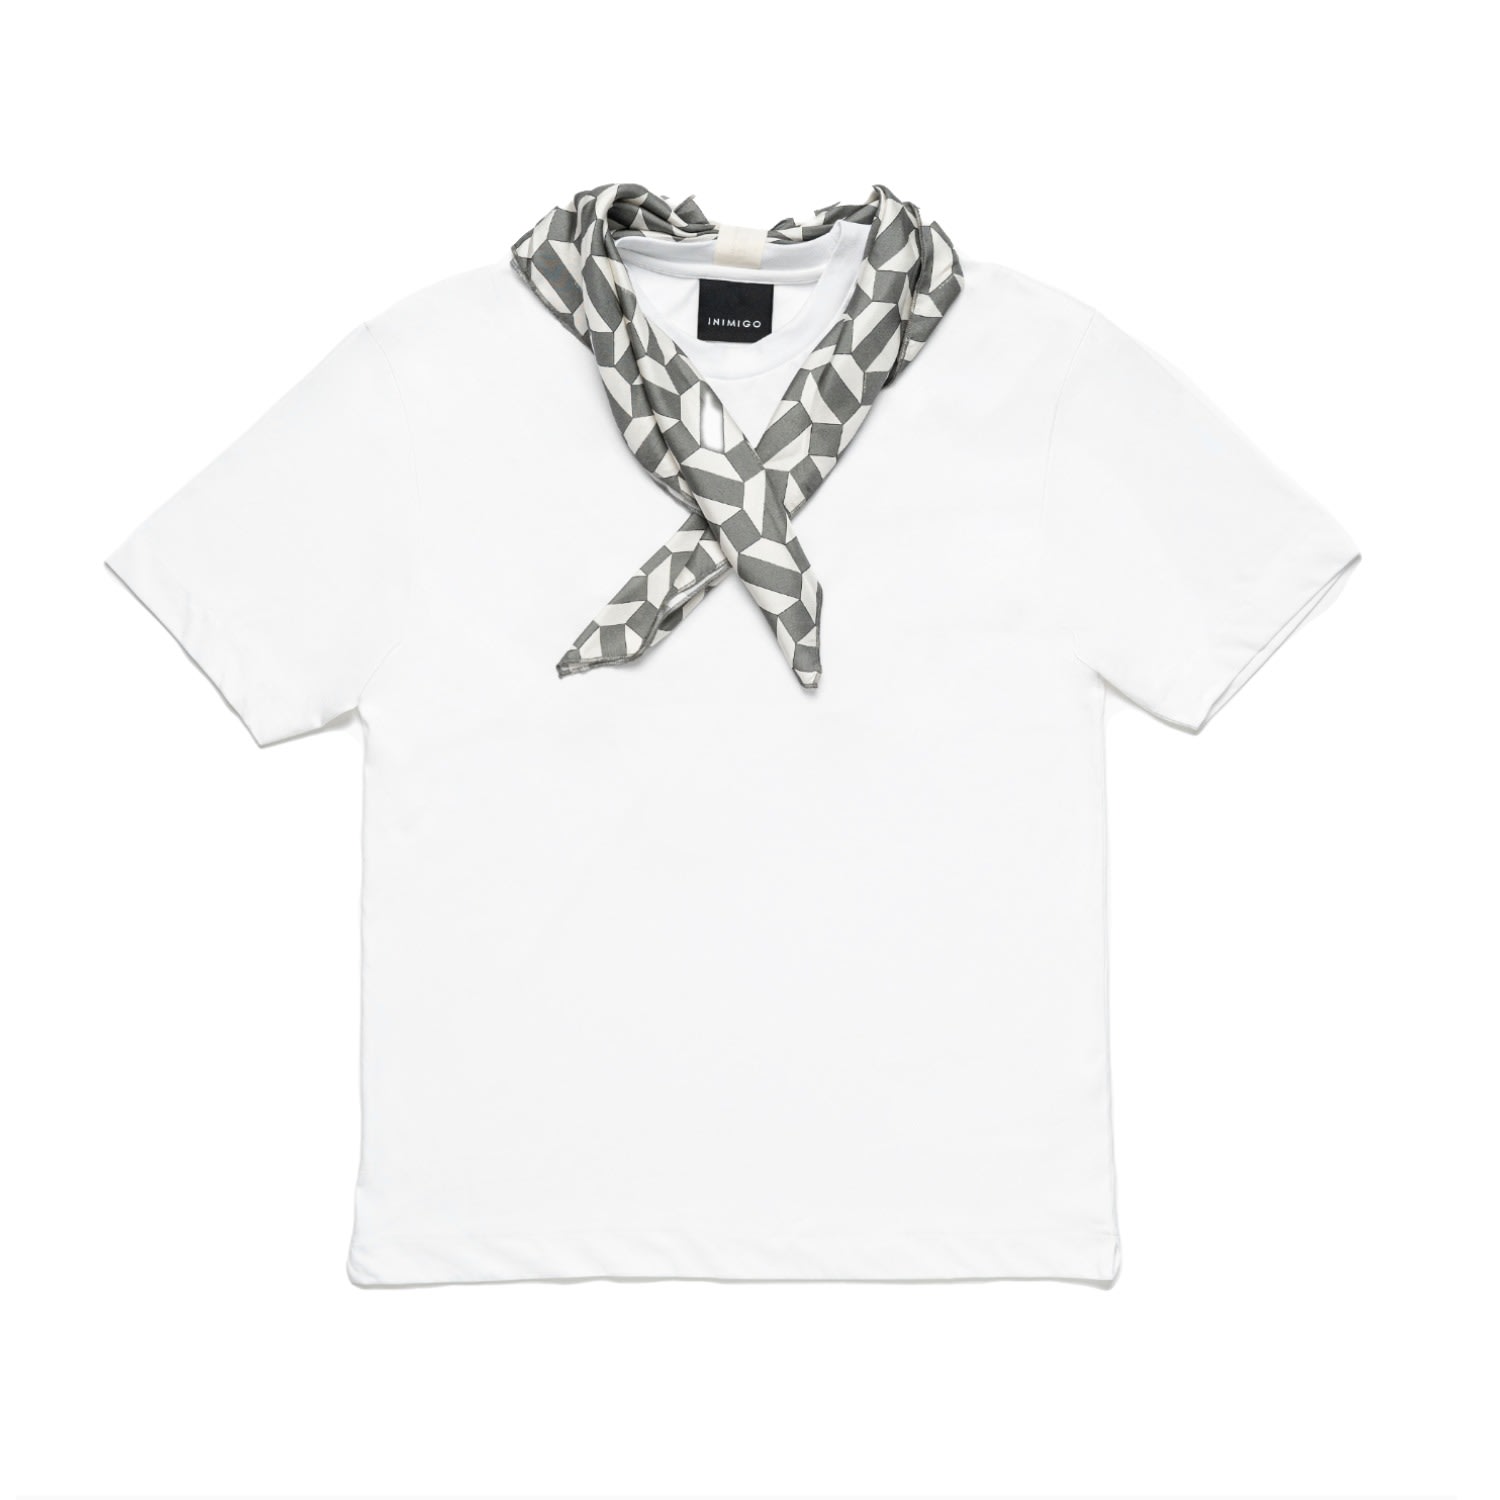 Men's Necklace Scarf Comfort White T-Shirt Small Inimigo